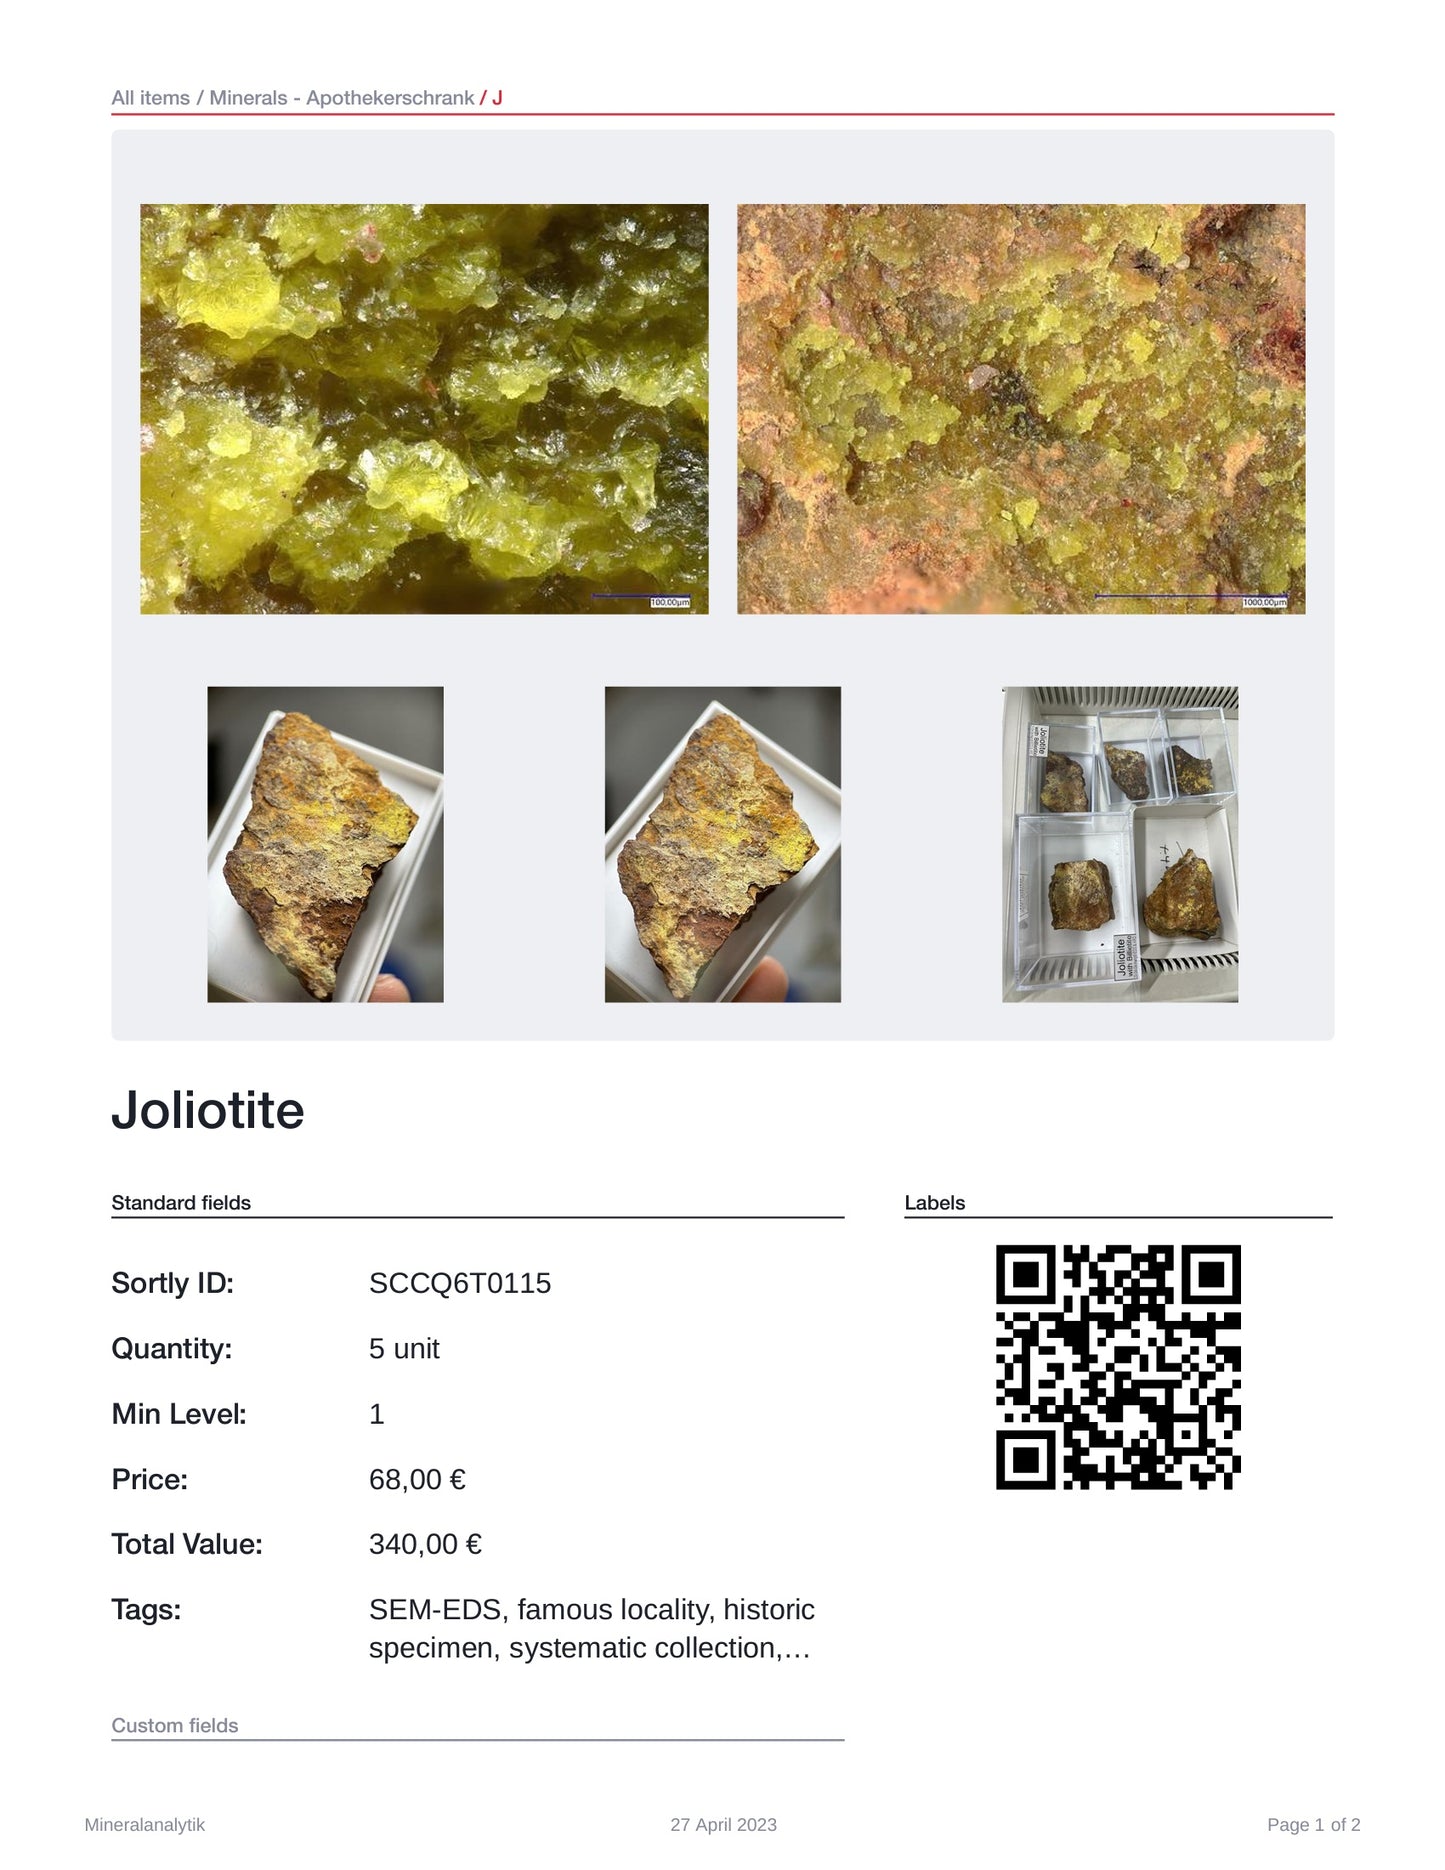 Joliotite